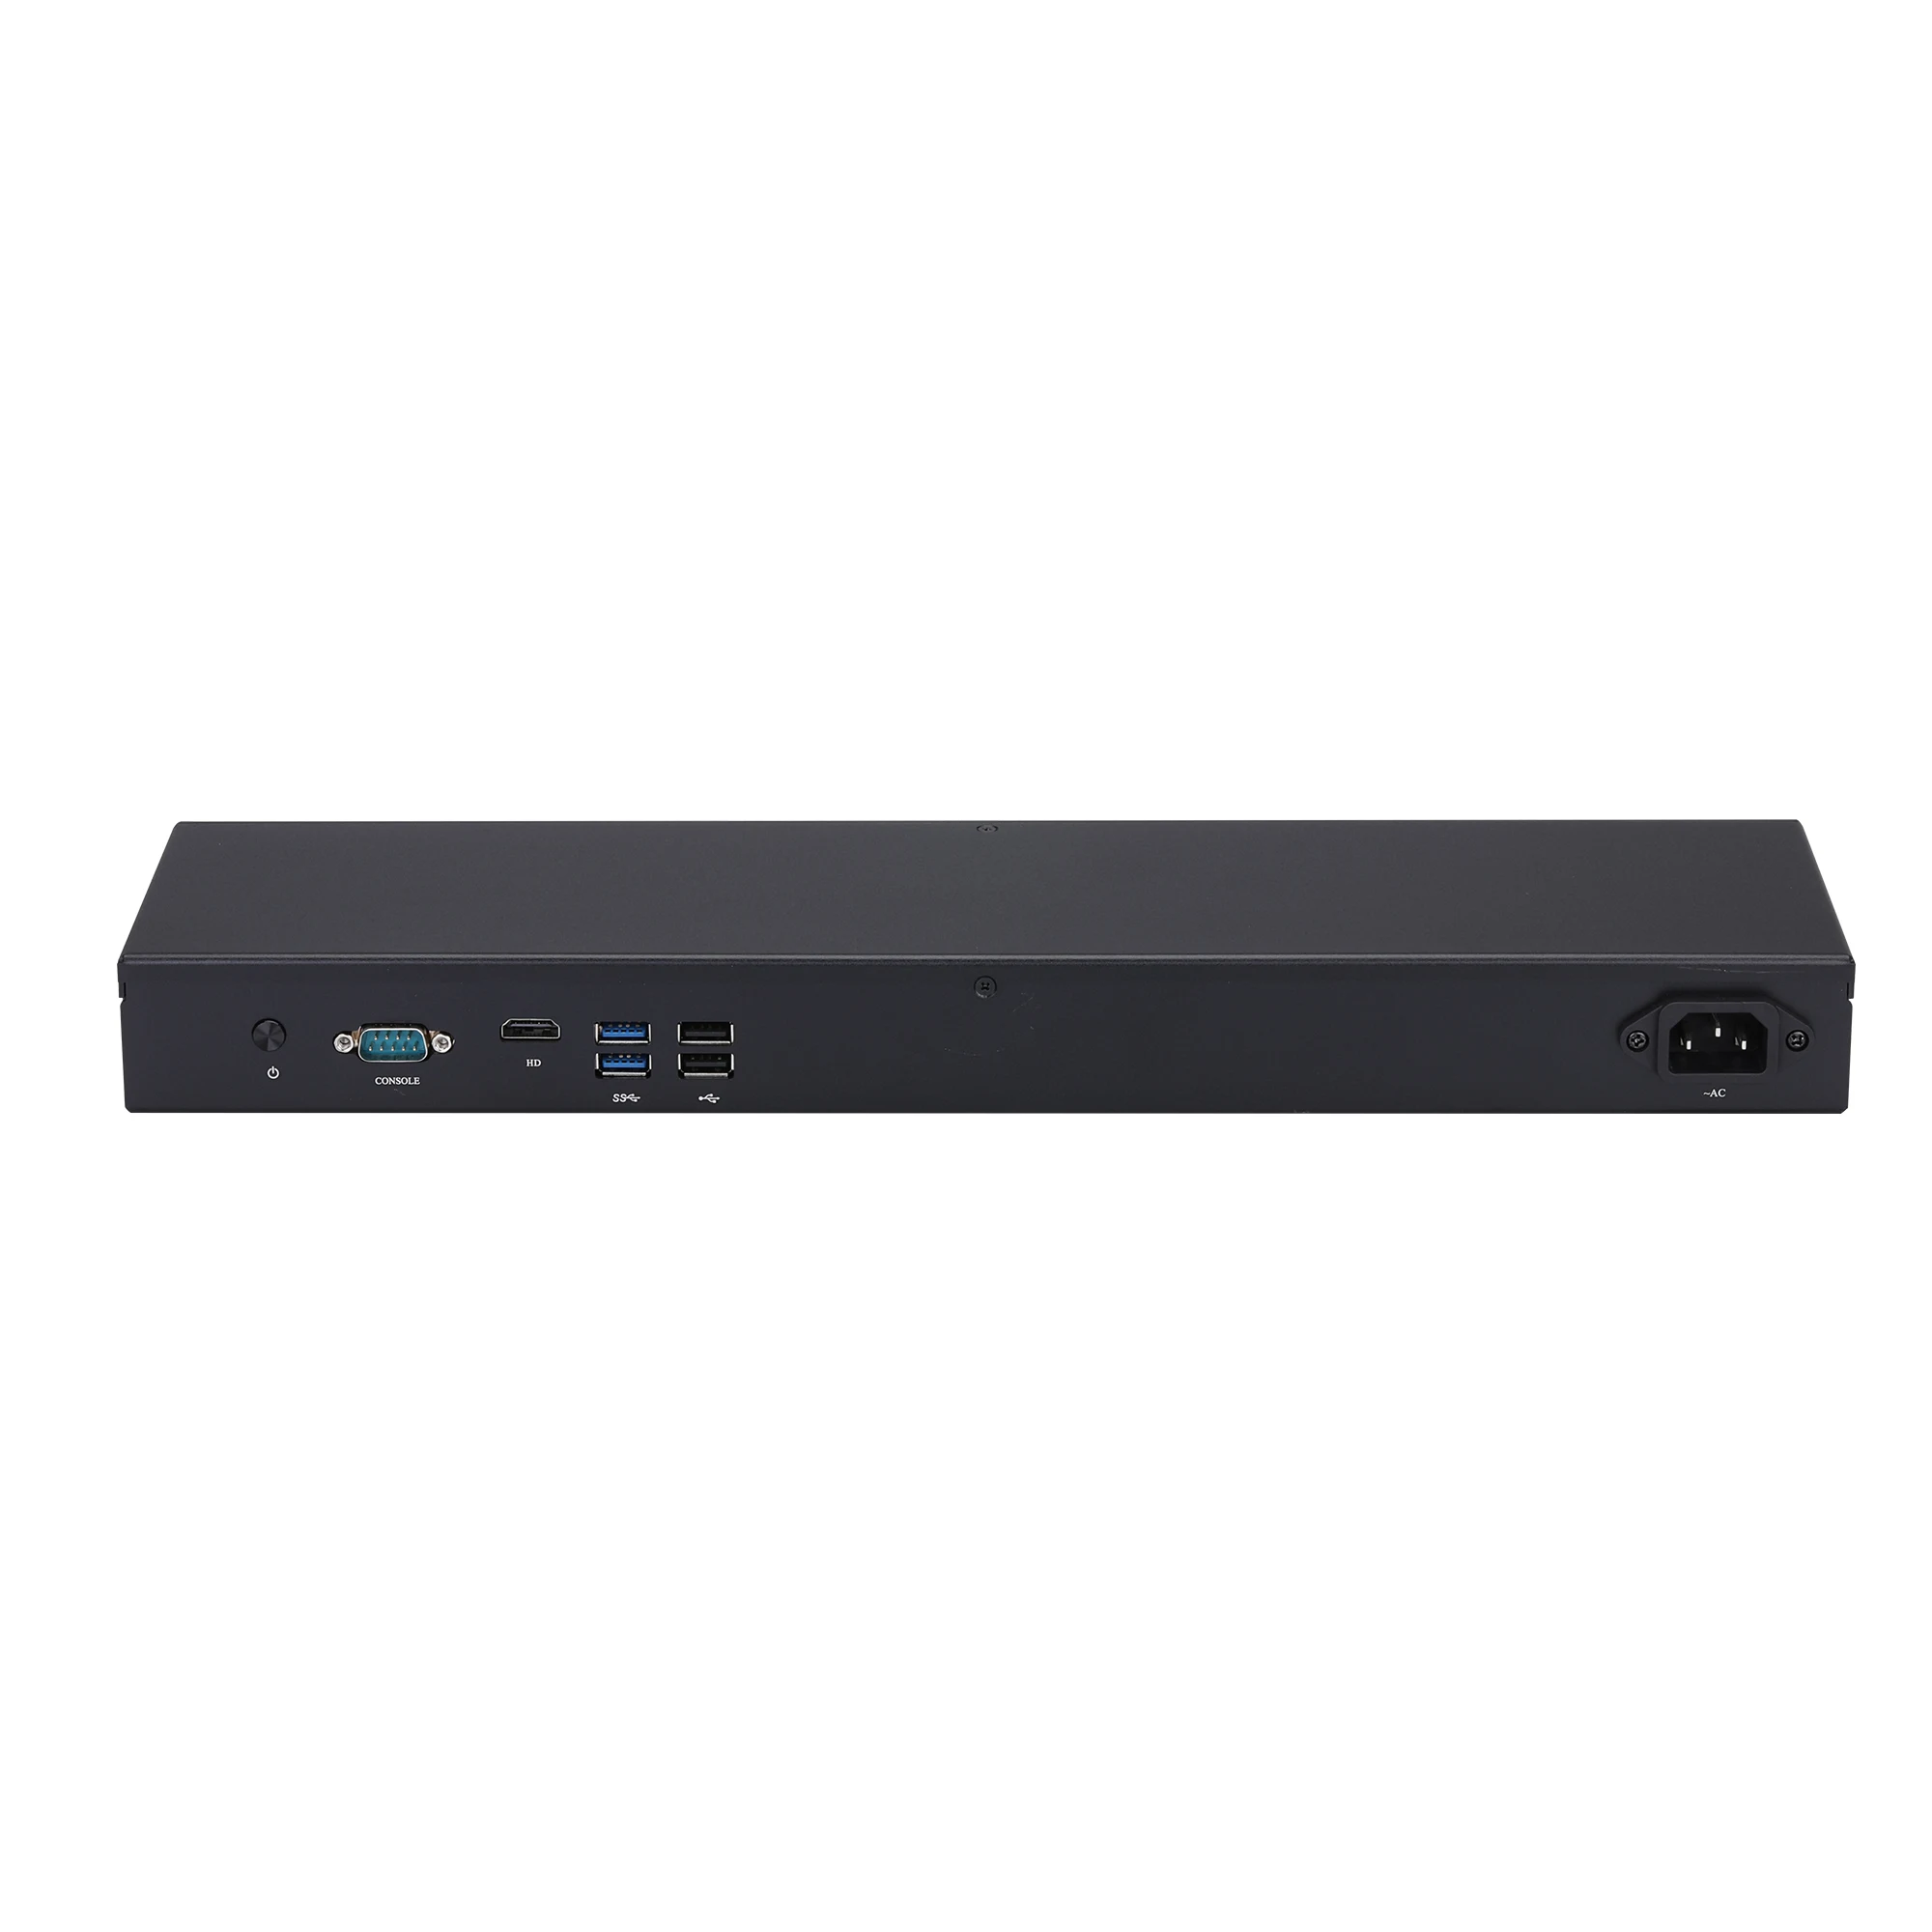 QOTOM 4 LAN Port 1U Rack Micro Appliance Router Firewall Q335G4 - Core i3 5005U